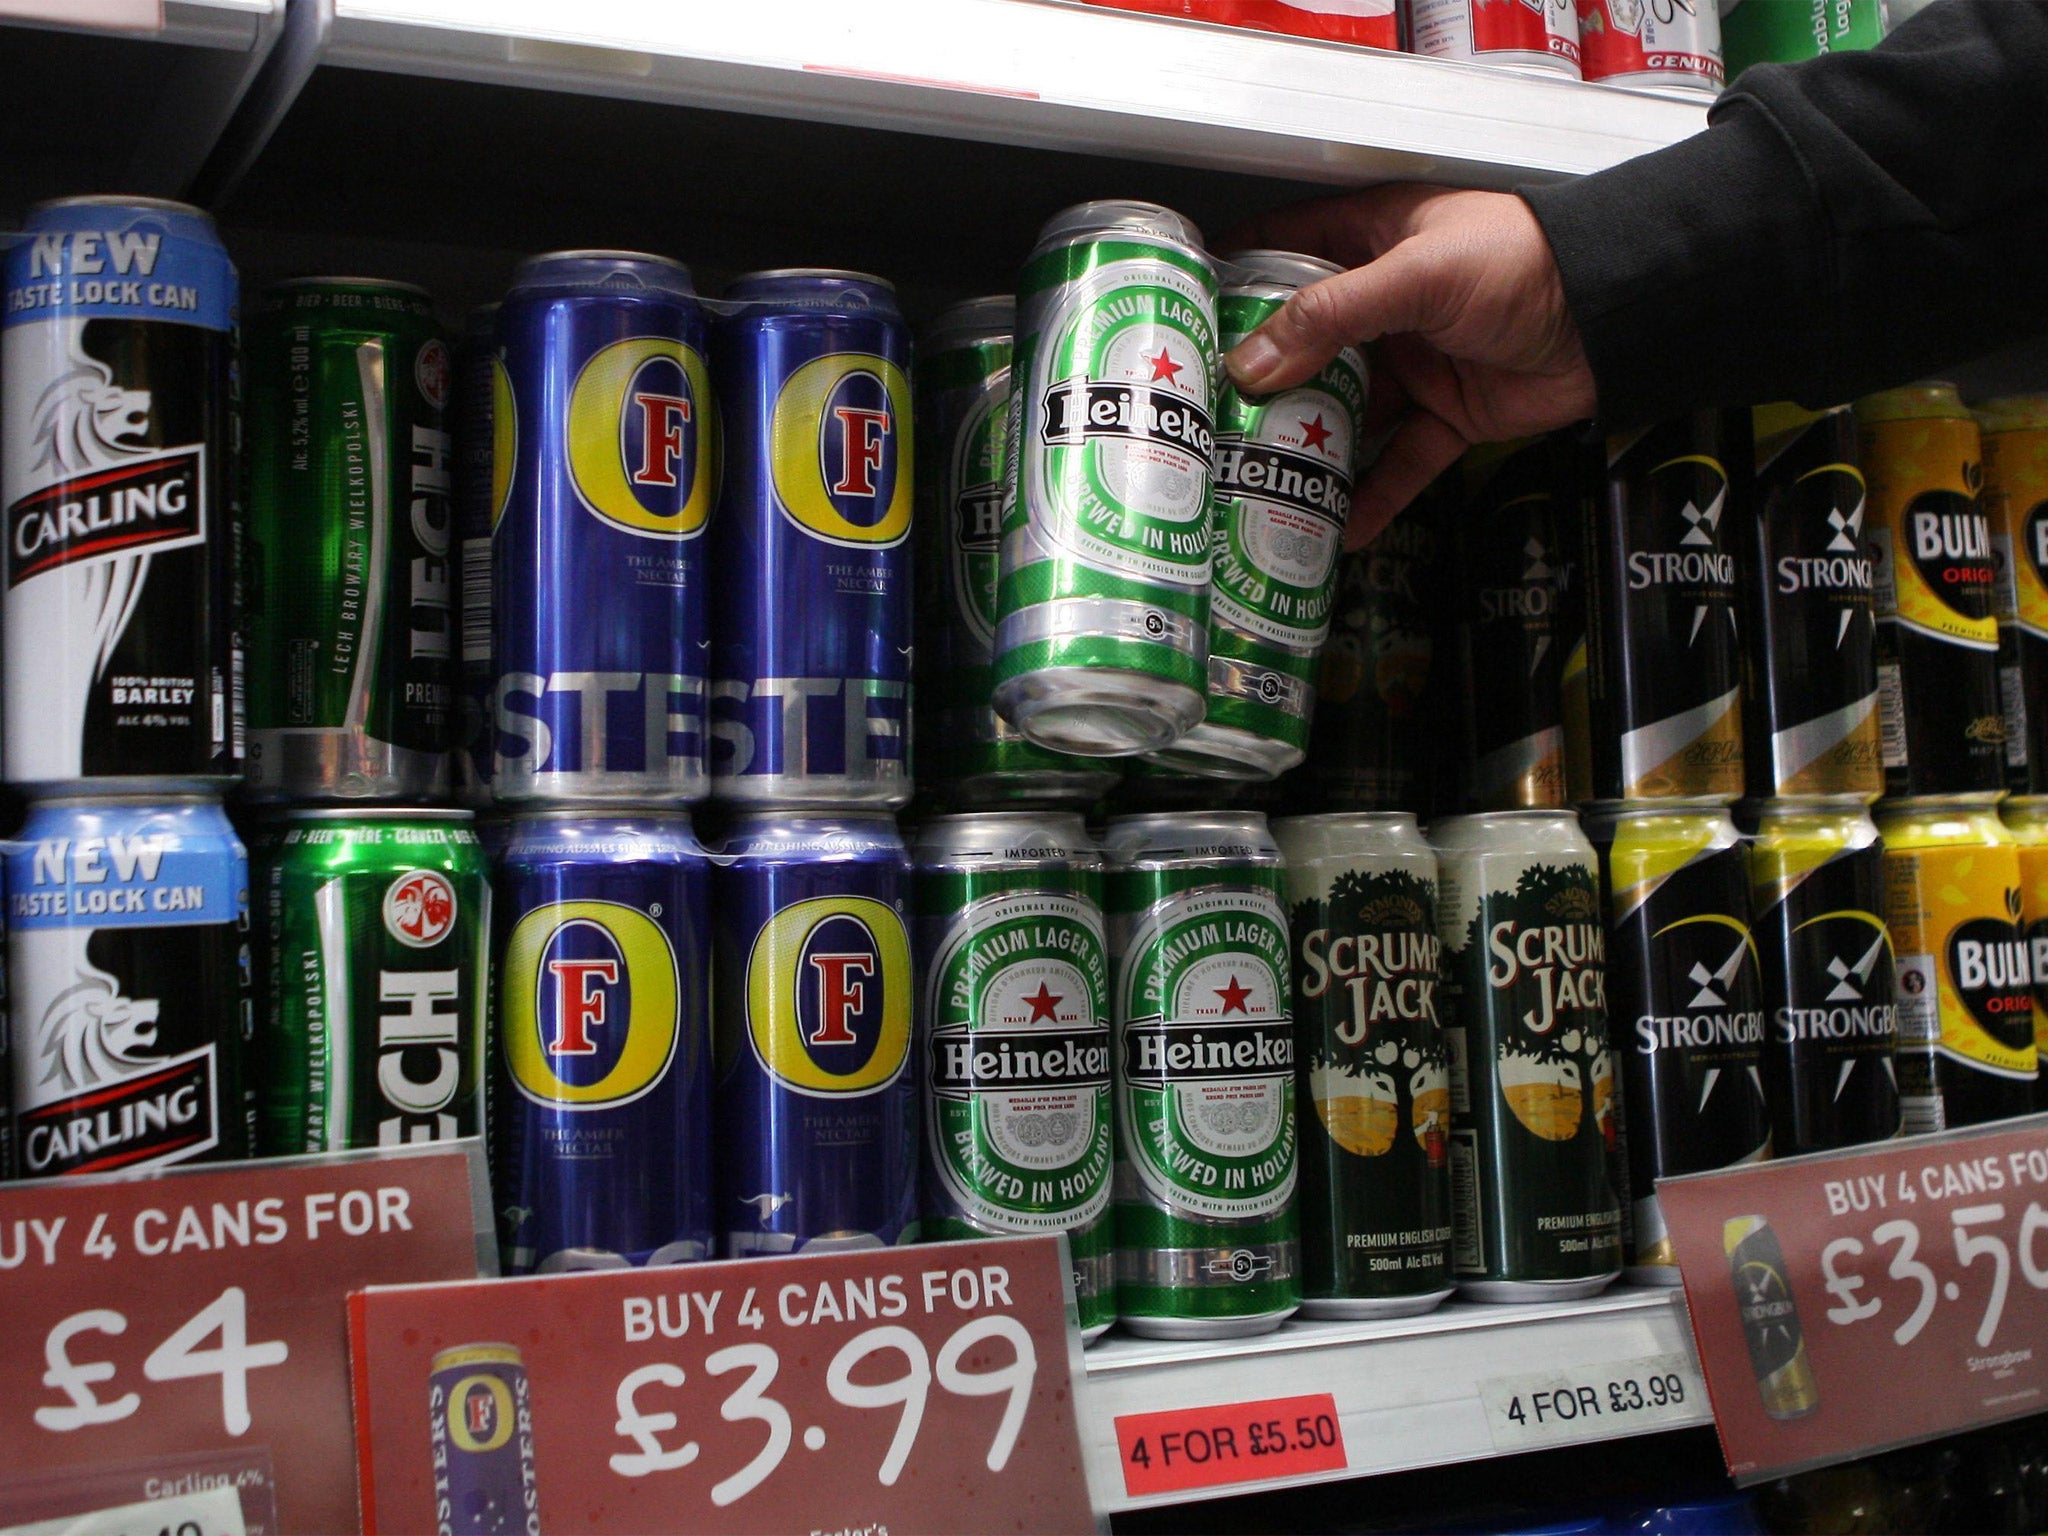 Cans of lager on supermarket shelf